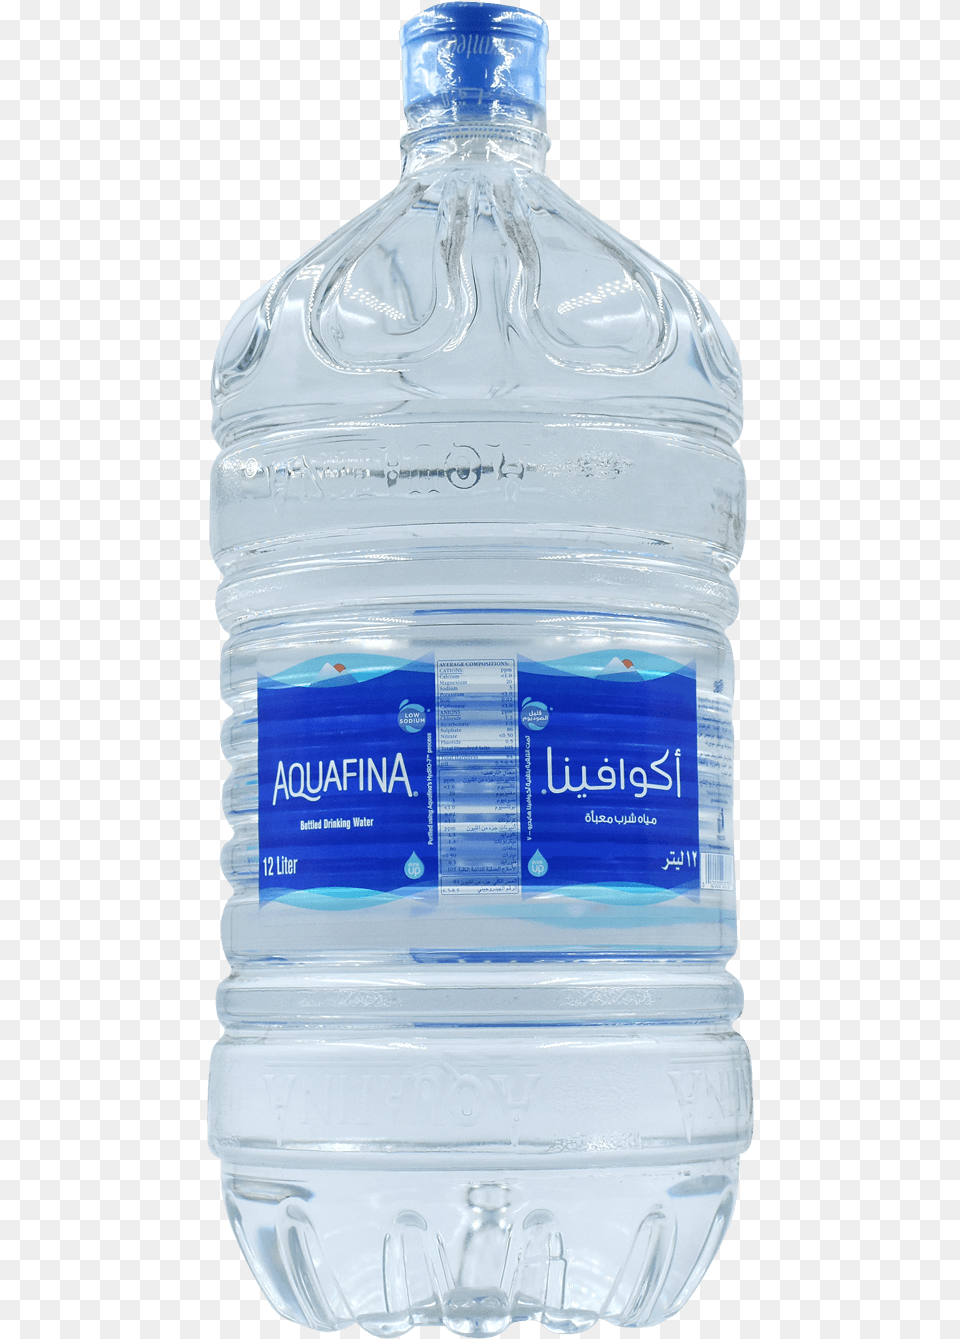 Aquafina Drinking Water 12 Liters, Beverage, Bottle, Mineral Water, Water Bottle Free Png Download